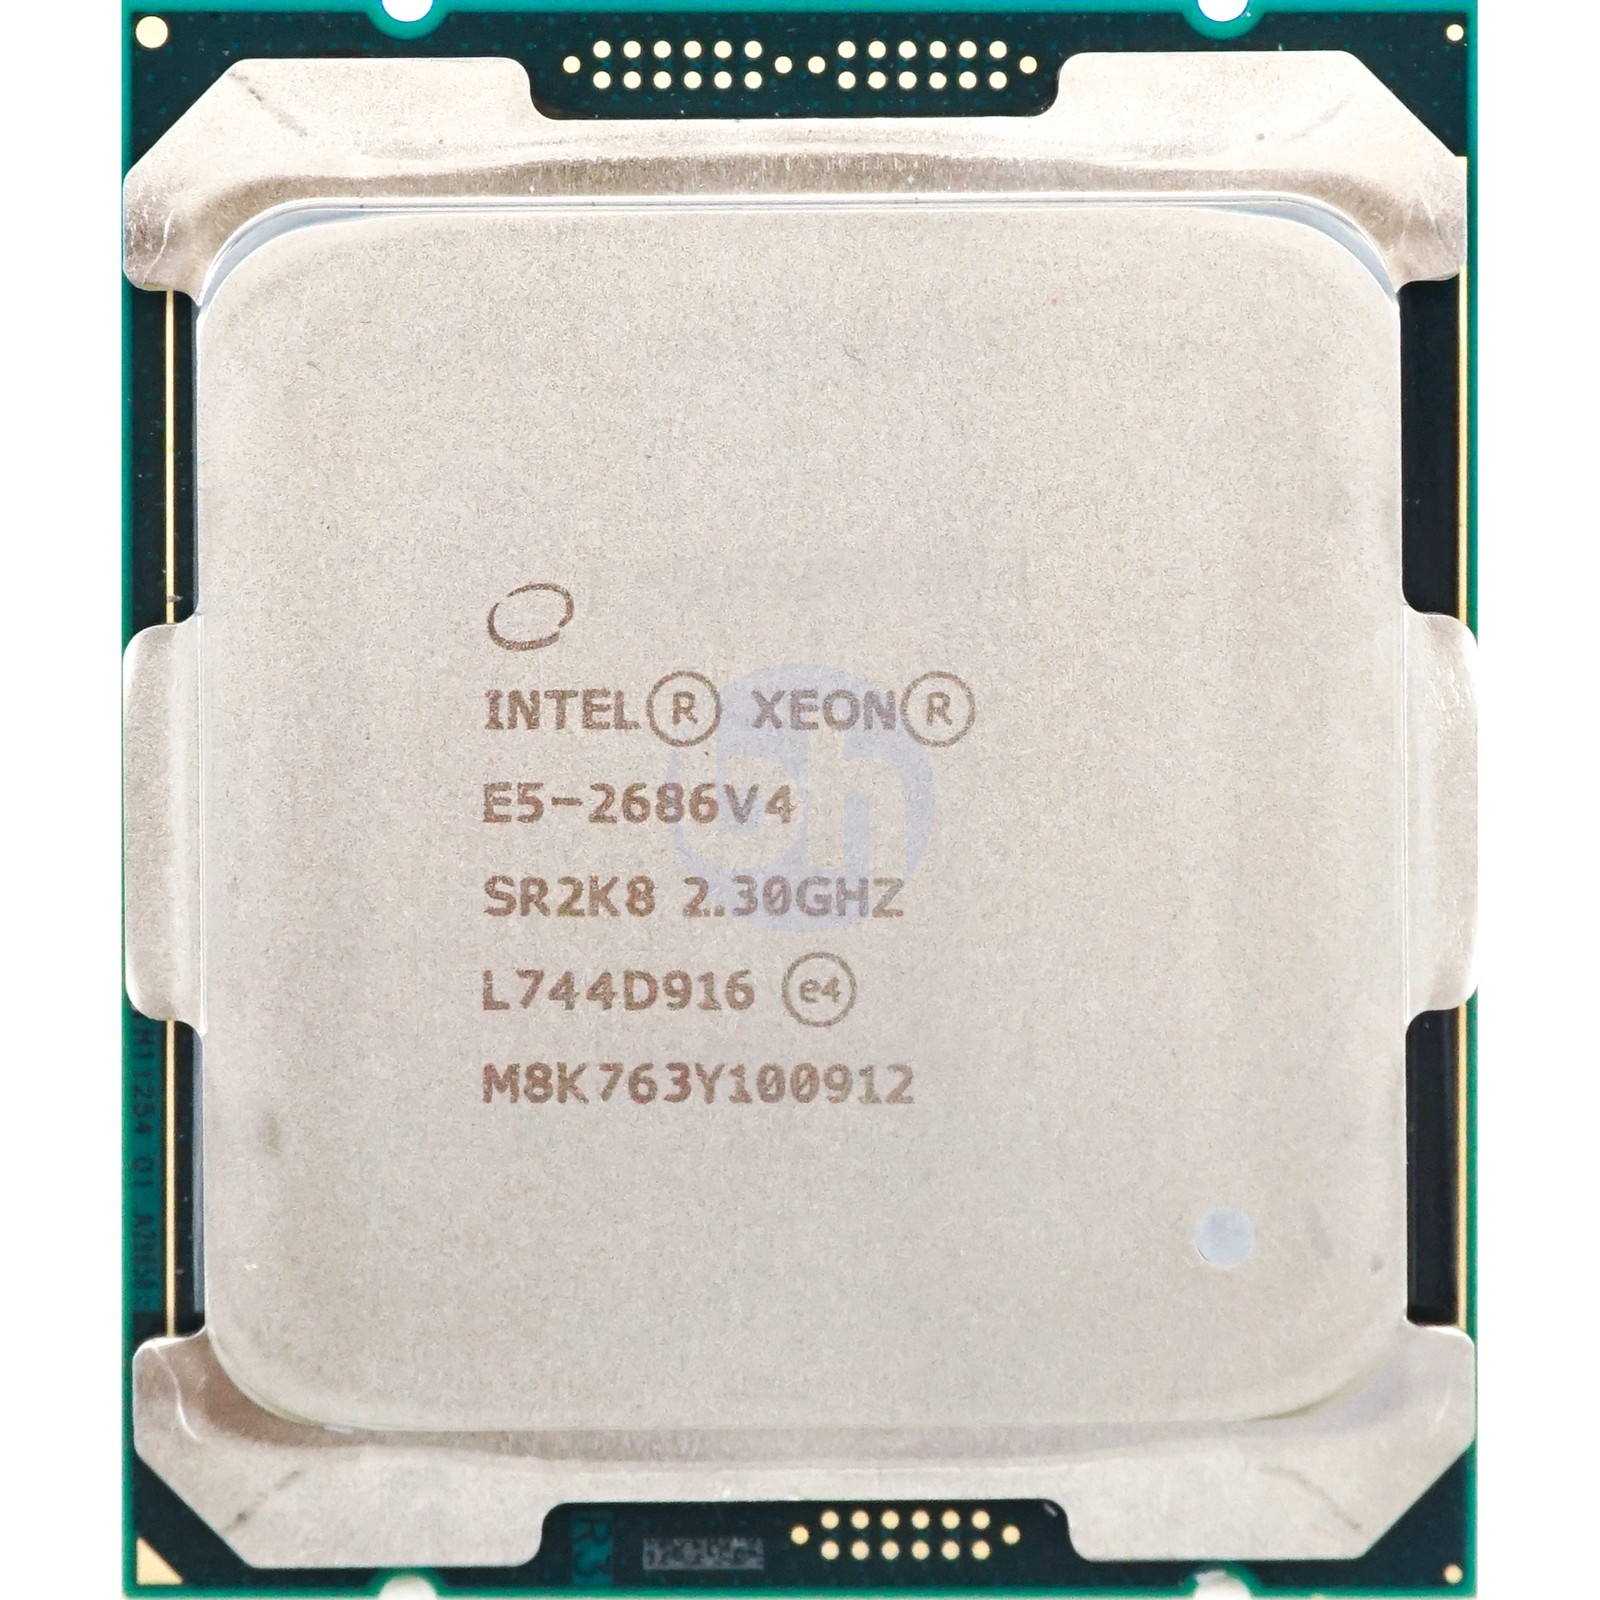 Intel Xeon E5-2686 V4 (SR2K8) - 18-Core 2.30GHz 145W 45MB Cache CPU